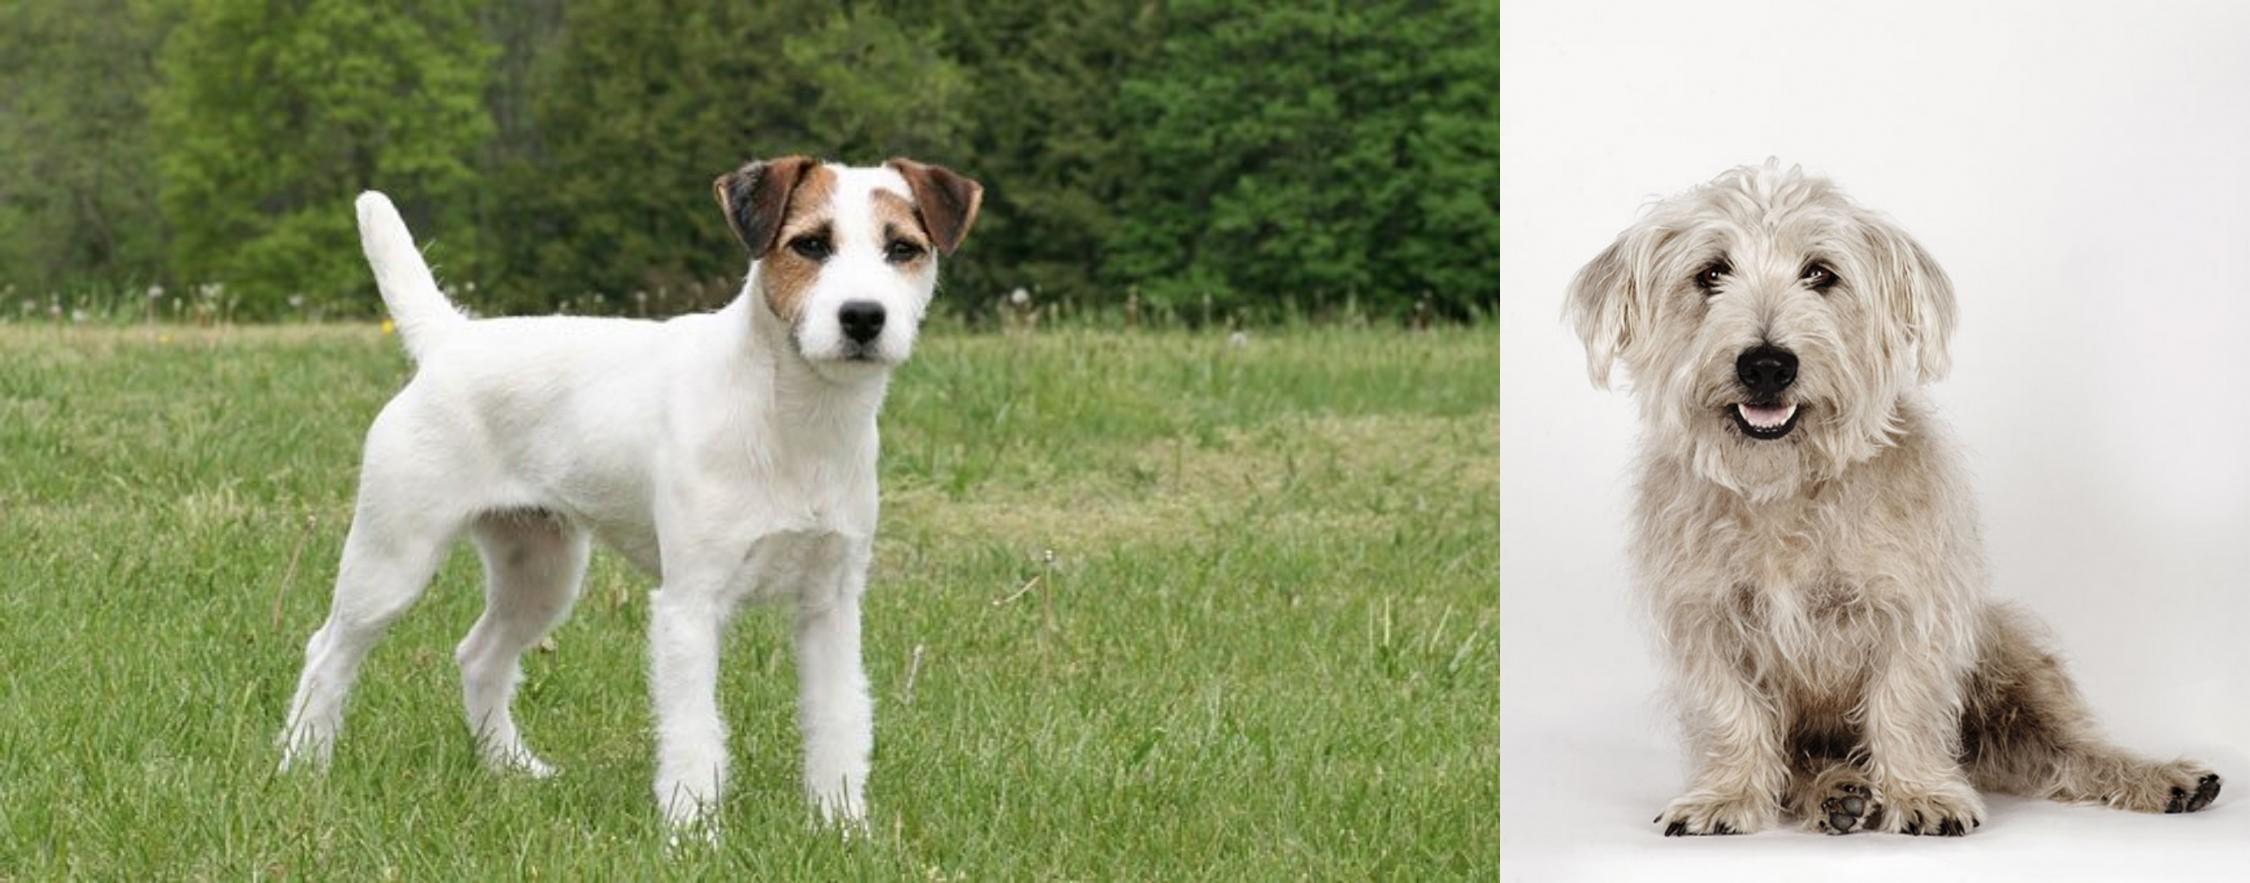 Jack Russell Terrier Vs Glen Of Imaal Terrier Breed Comparison